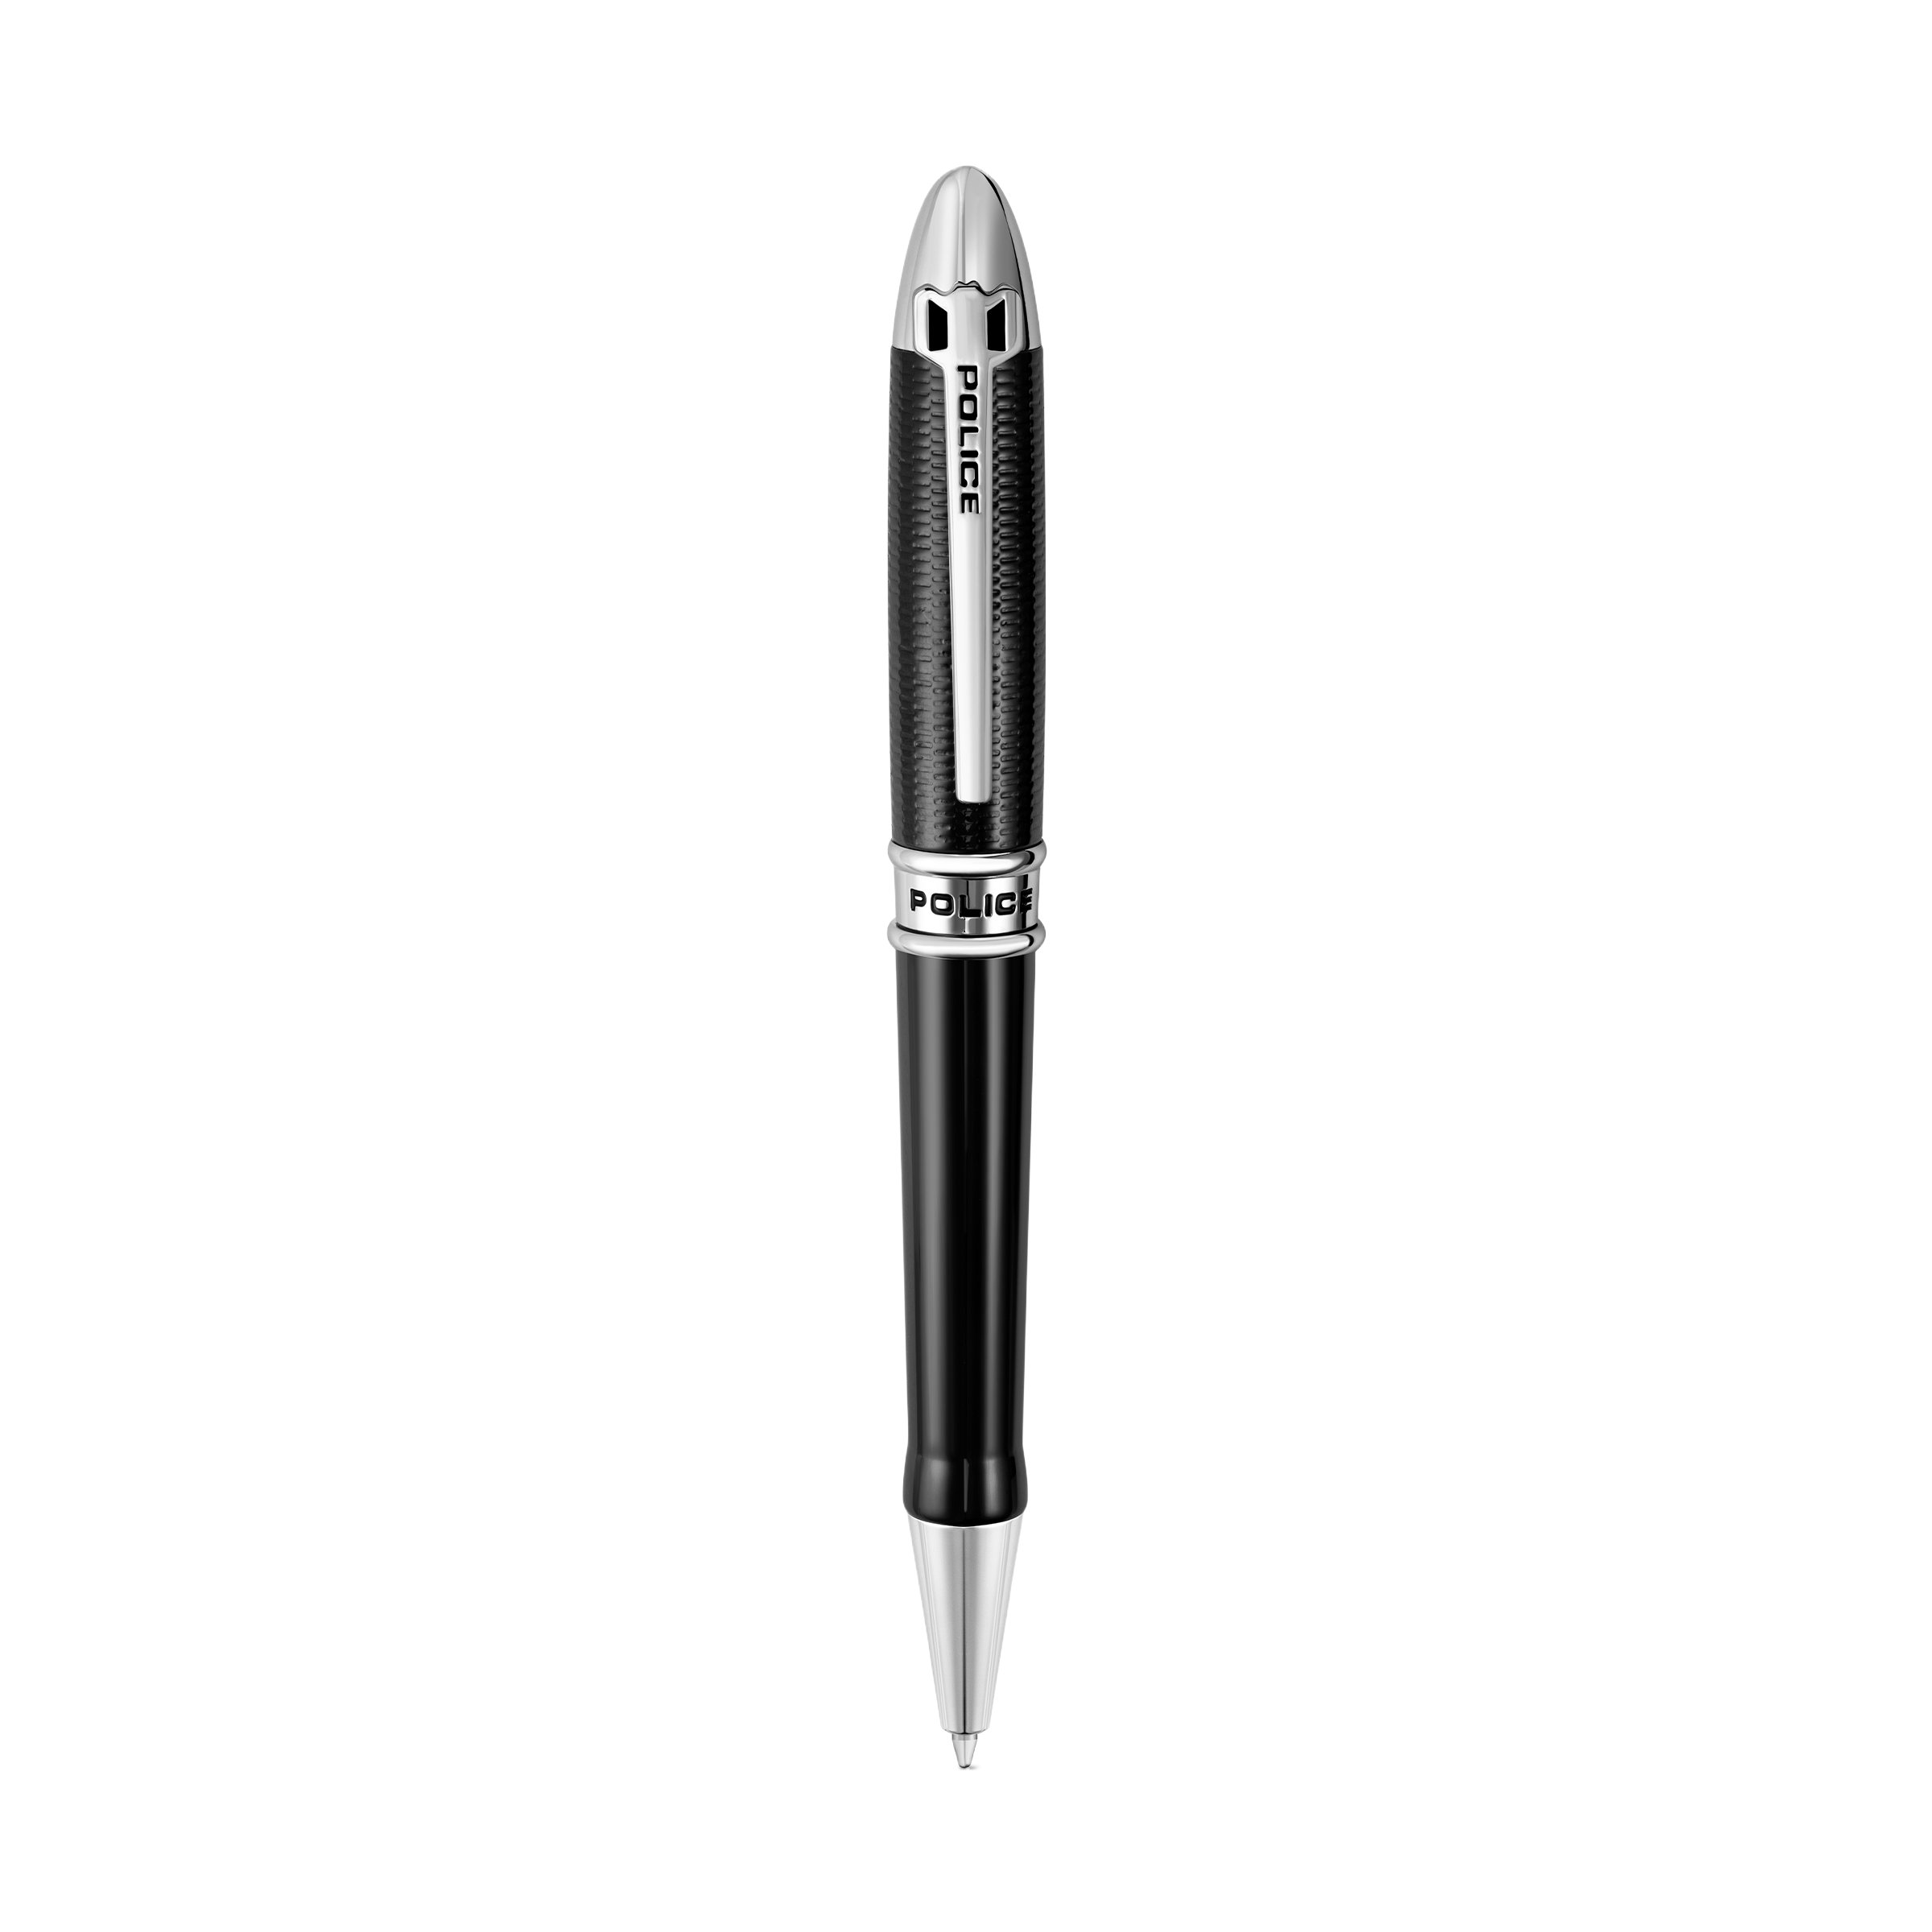 Police Kristen Pen For Men Black & Silver Color - PERGR0002704